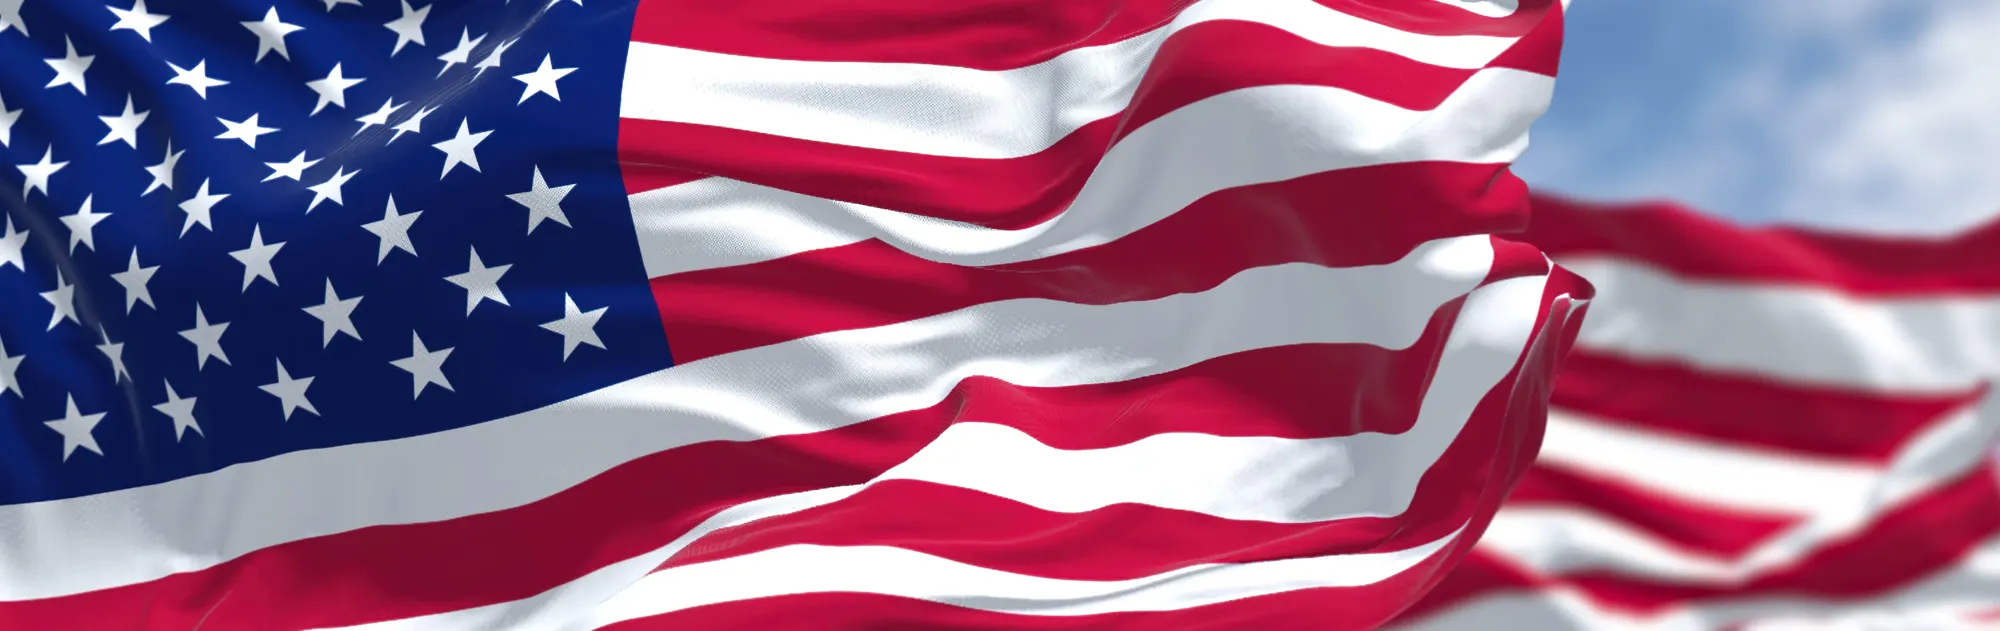 American Flag in wind